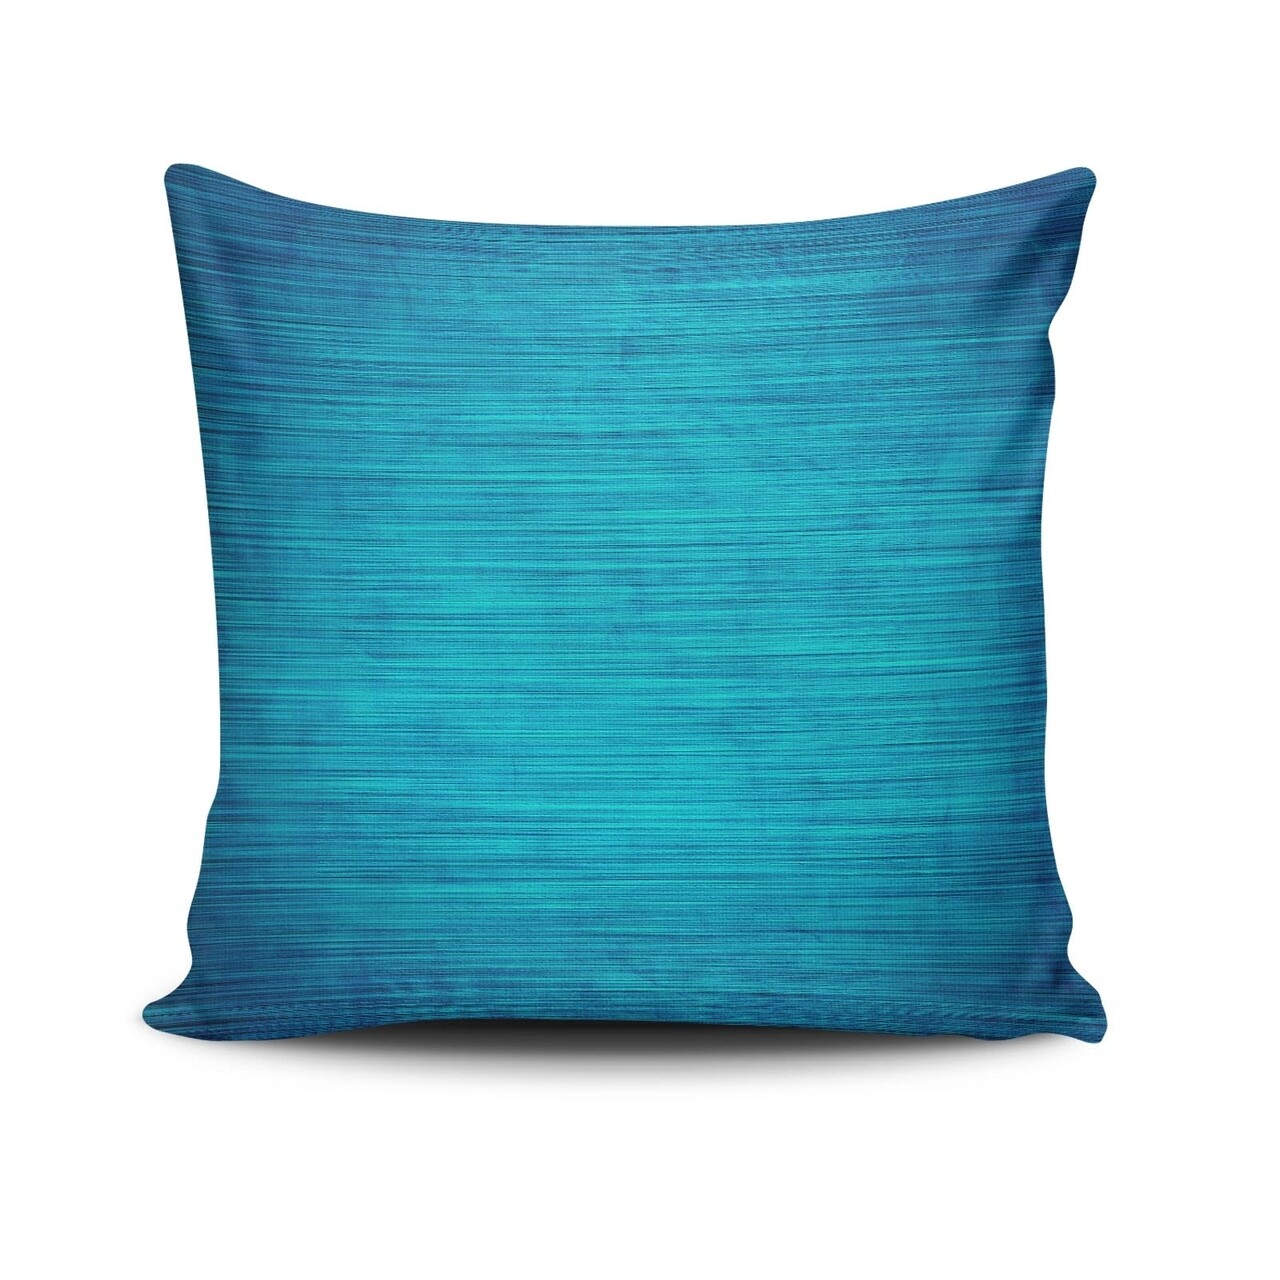 Párnahuzat, Cushion Love, NKLF - 383, pamutkeverék, 43x43 cm, kék